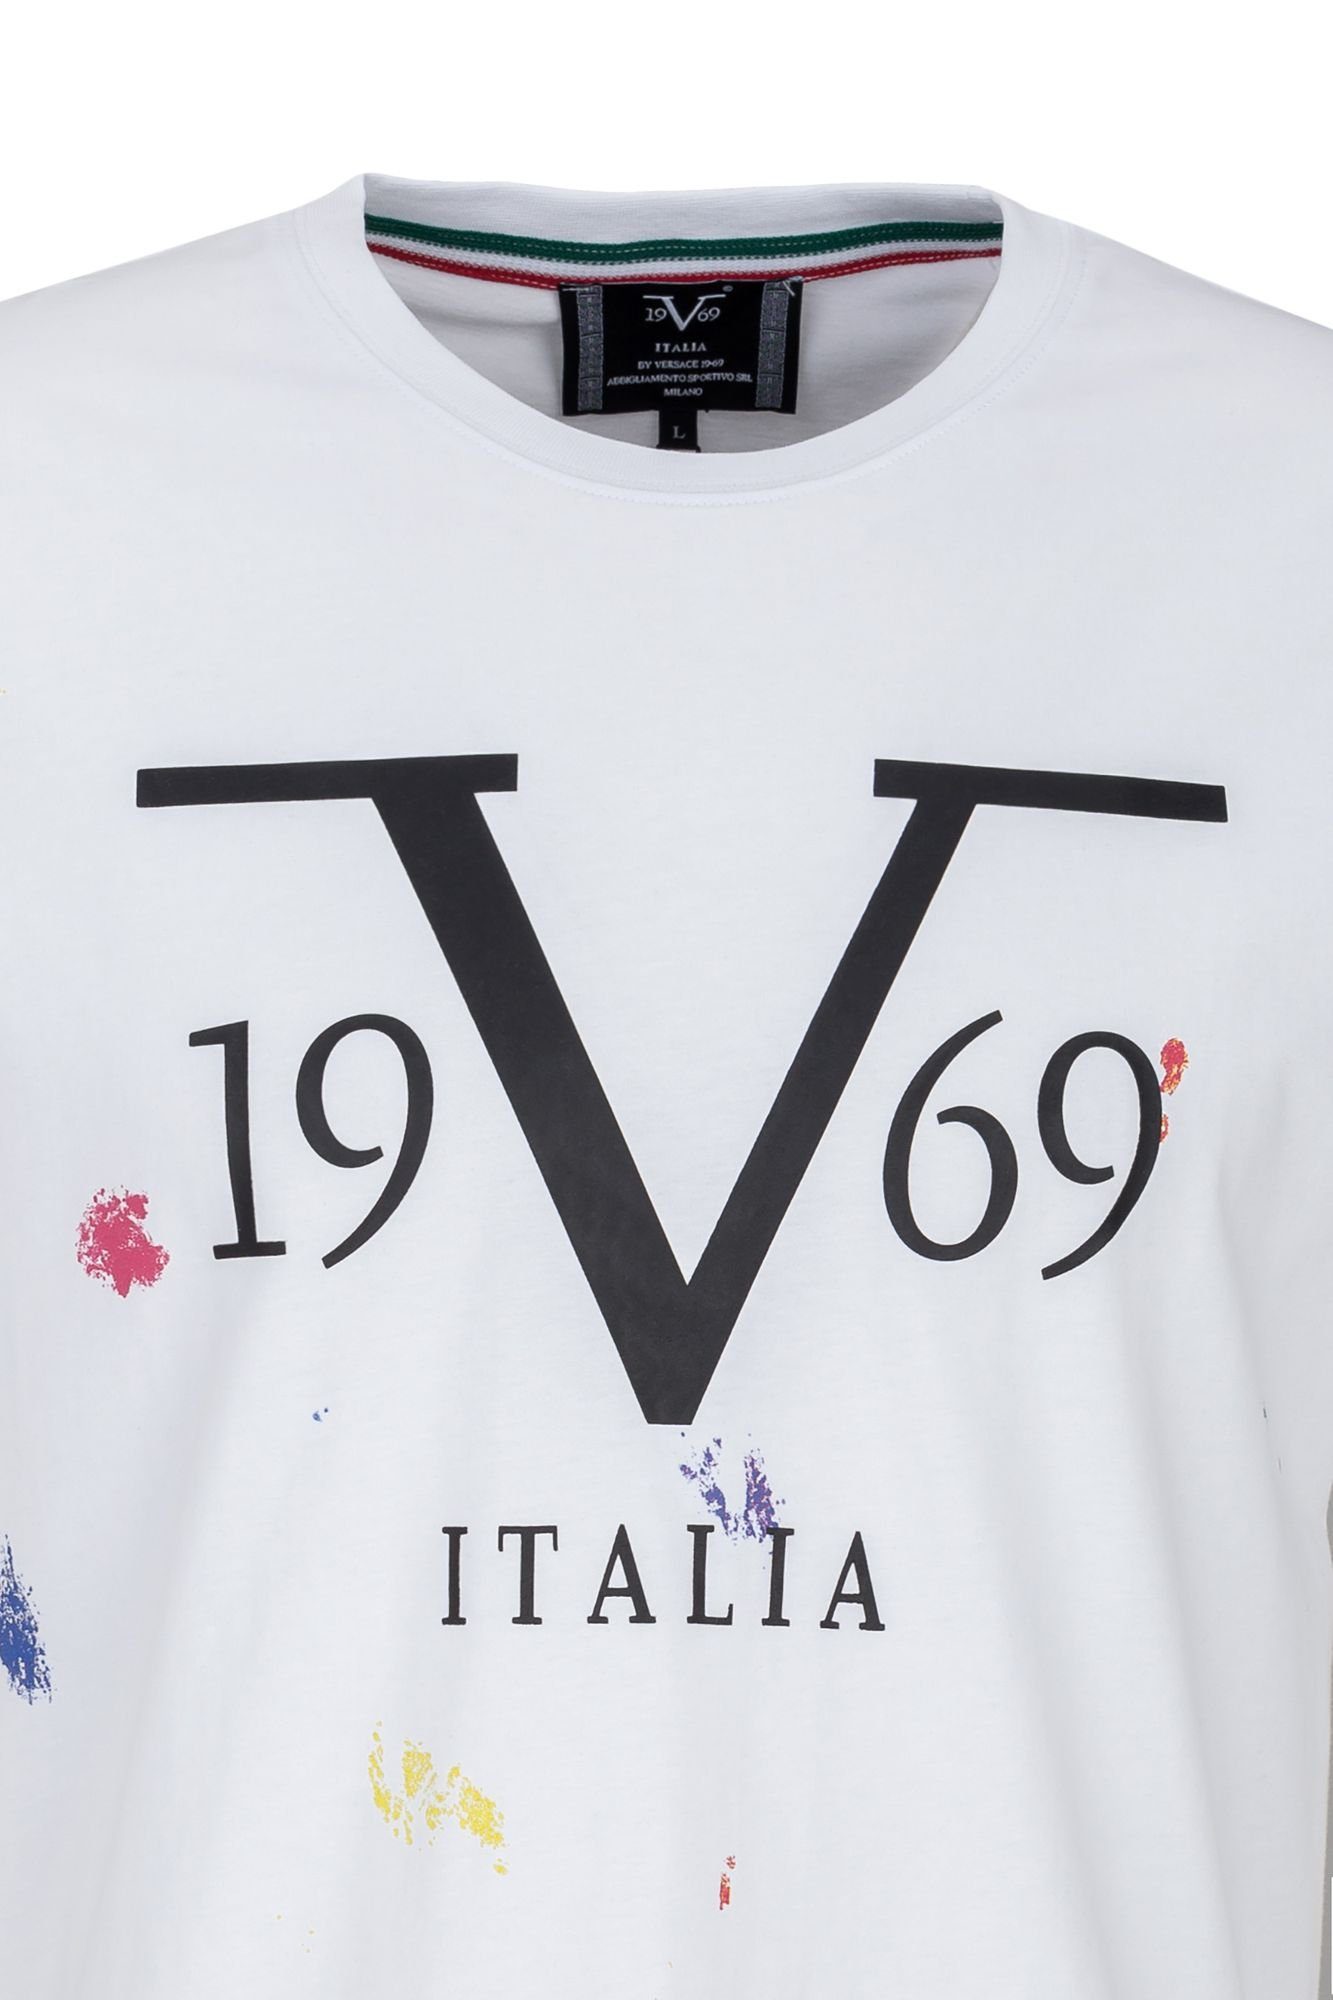 19V69 Italia by Versace Leonardo by Sportivo SRL Versace Rundhalsshirt 